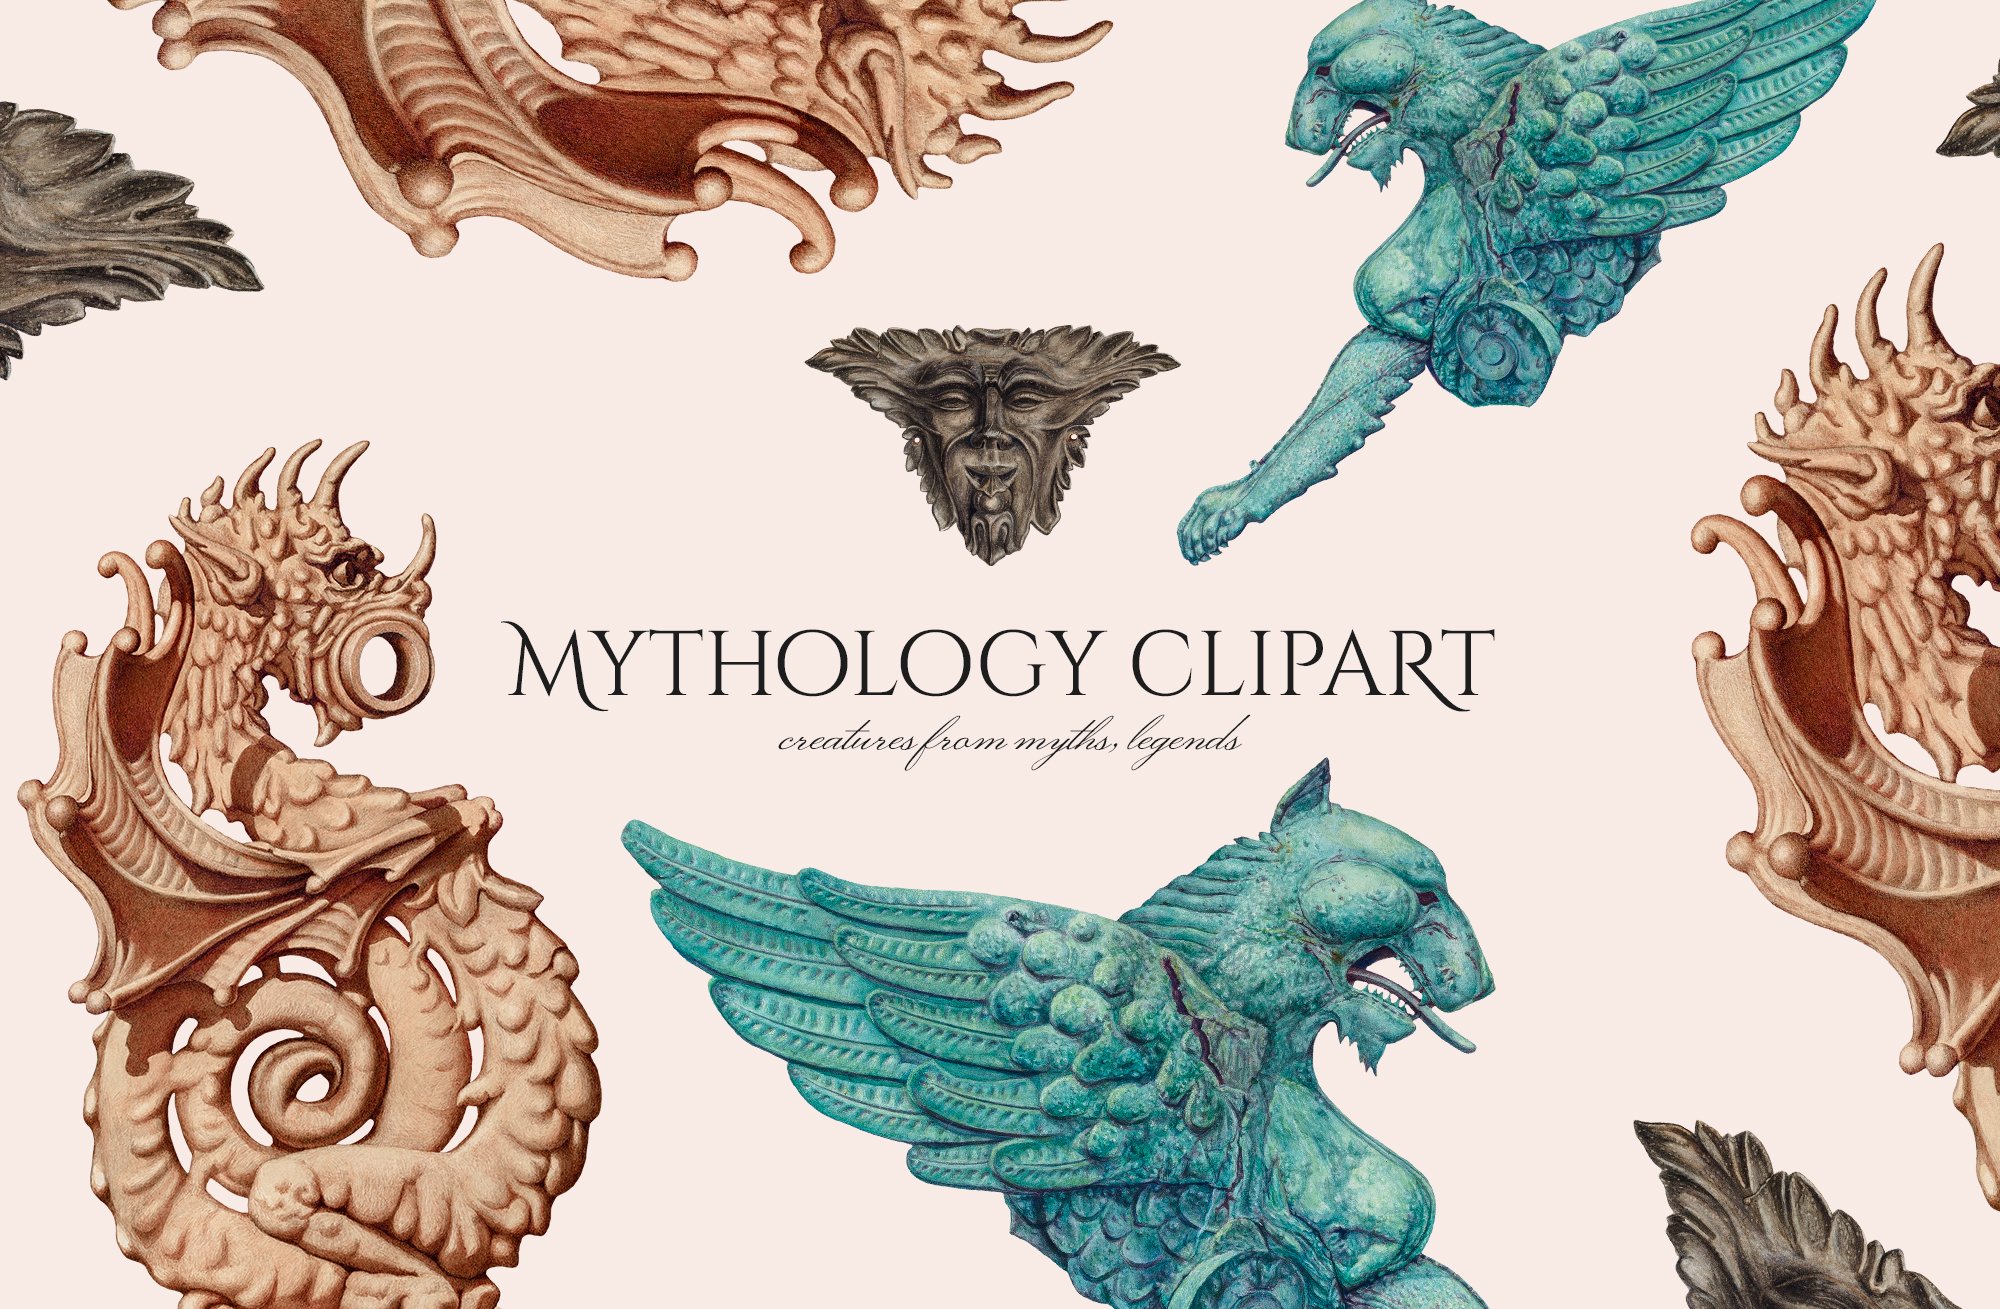 Vintage Mythology Clipart Set cover image.